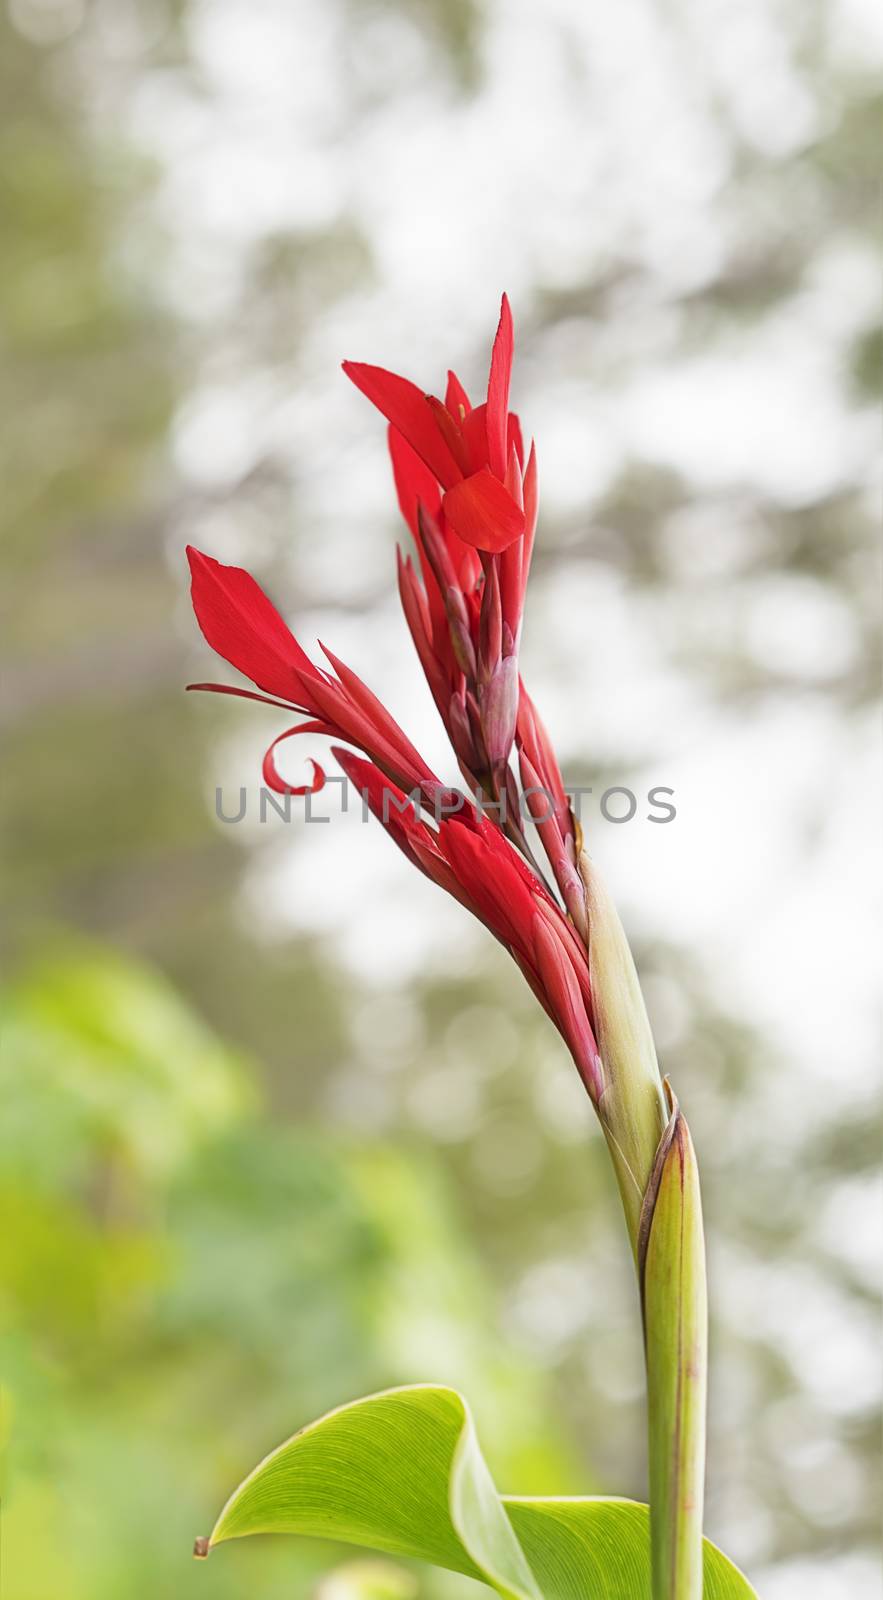 Canna edulis red arrowroot flower by sherj